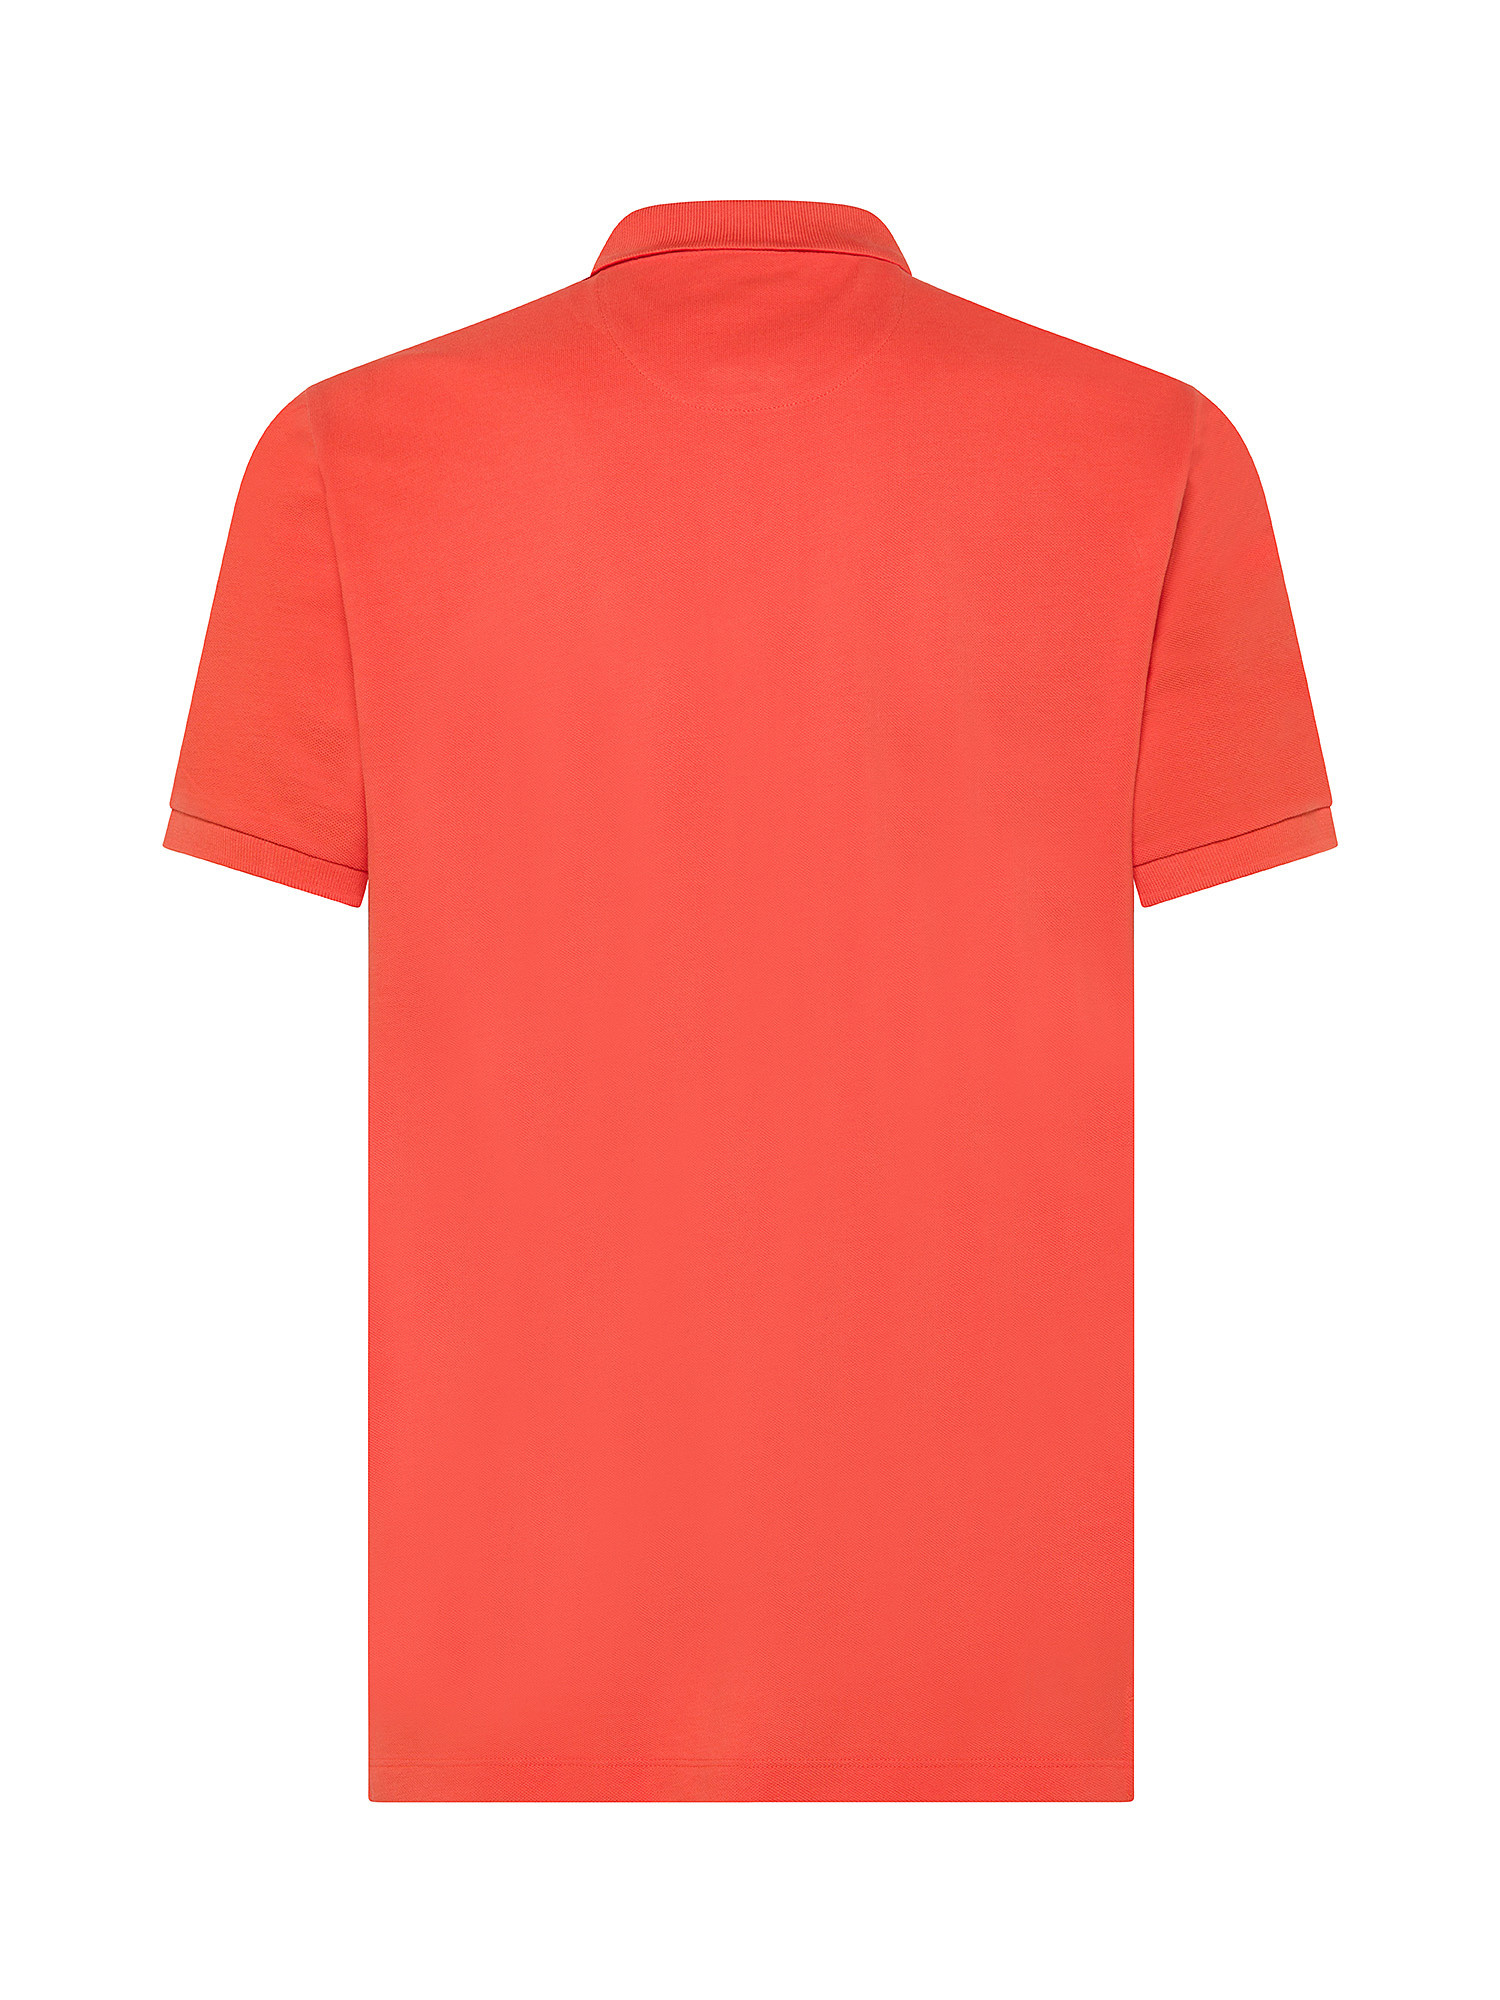 Luca D'Altieri - Polo in pure cotton, Orange, large image number 1